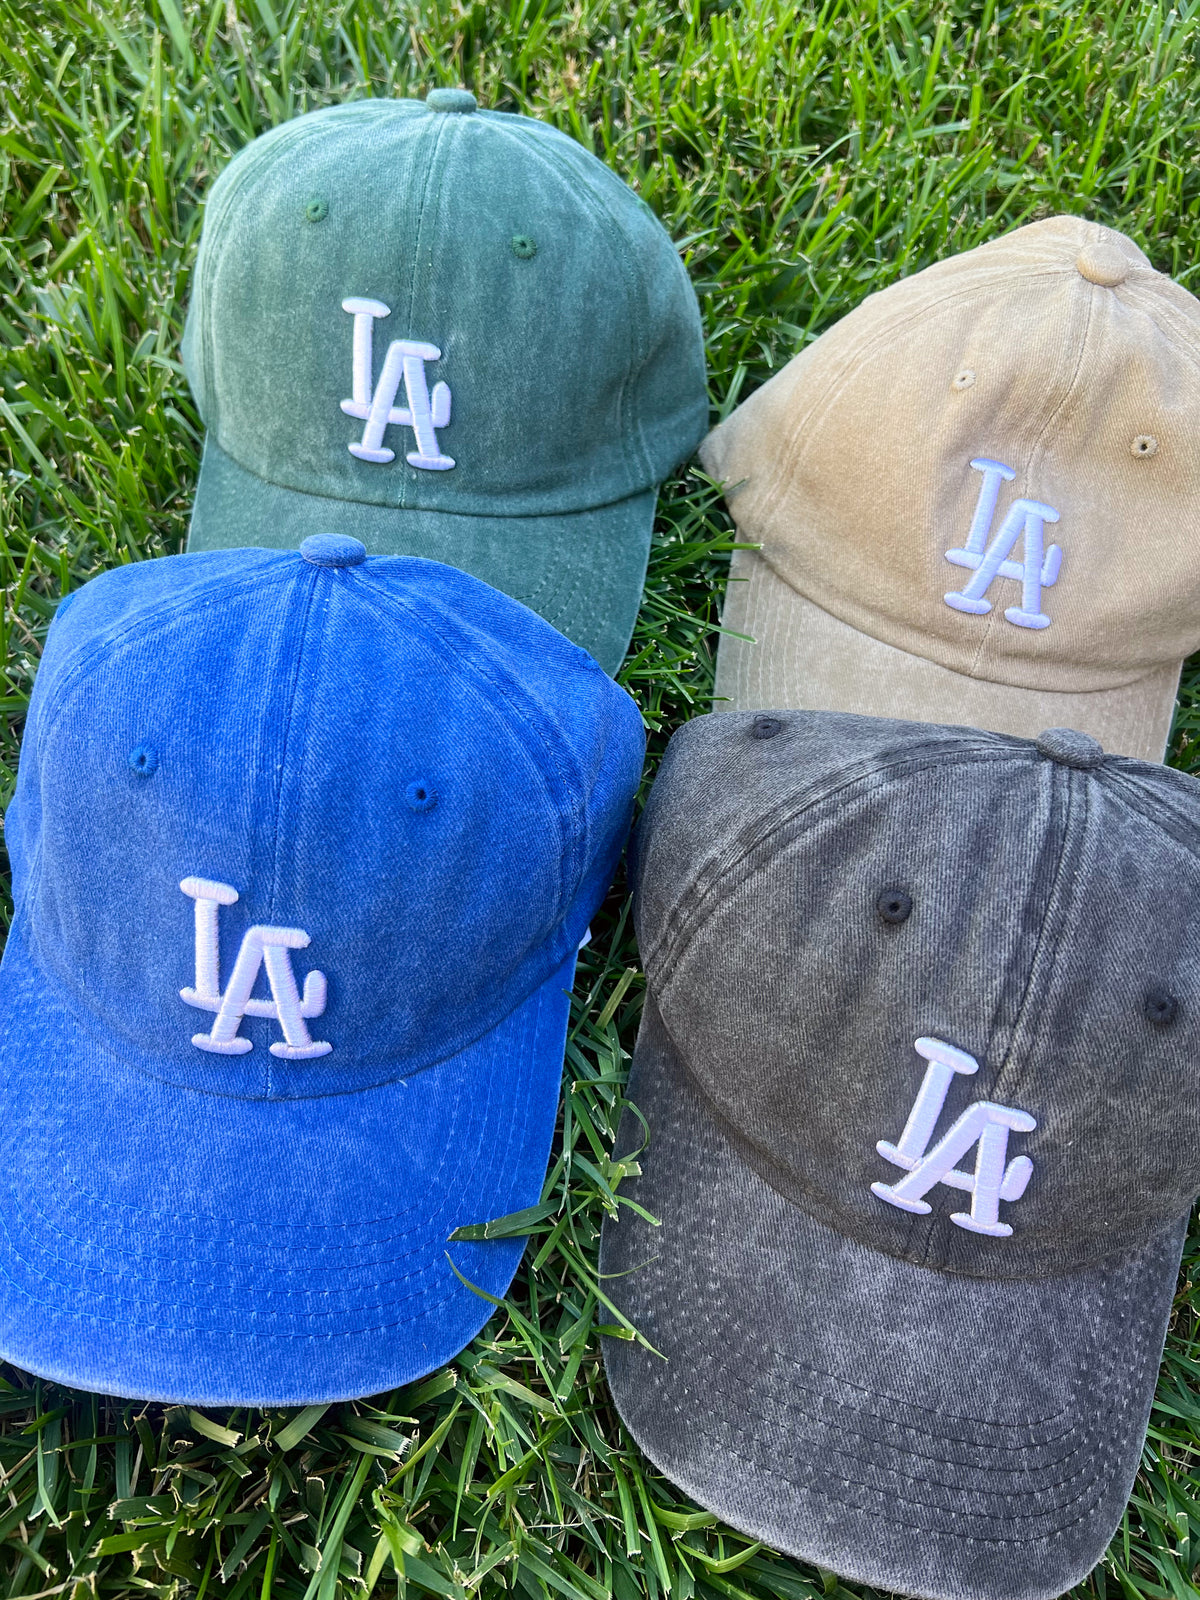 LA Hat (Royal Blue)